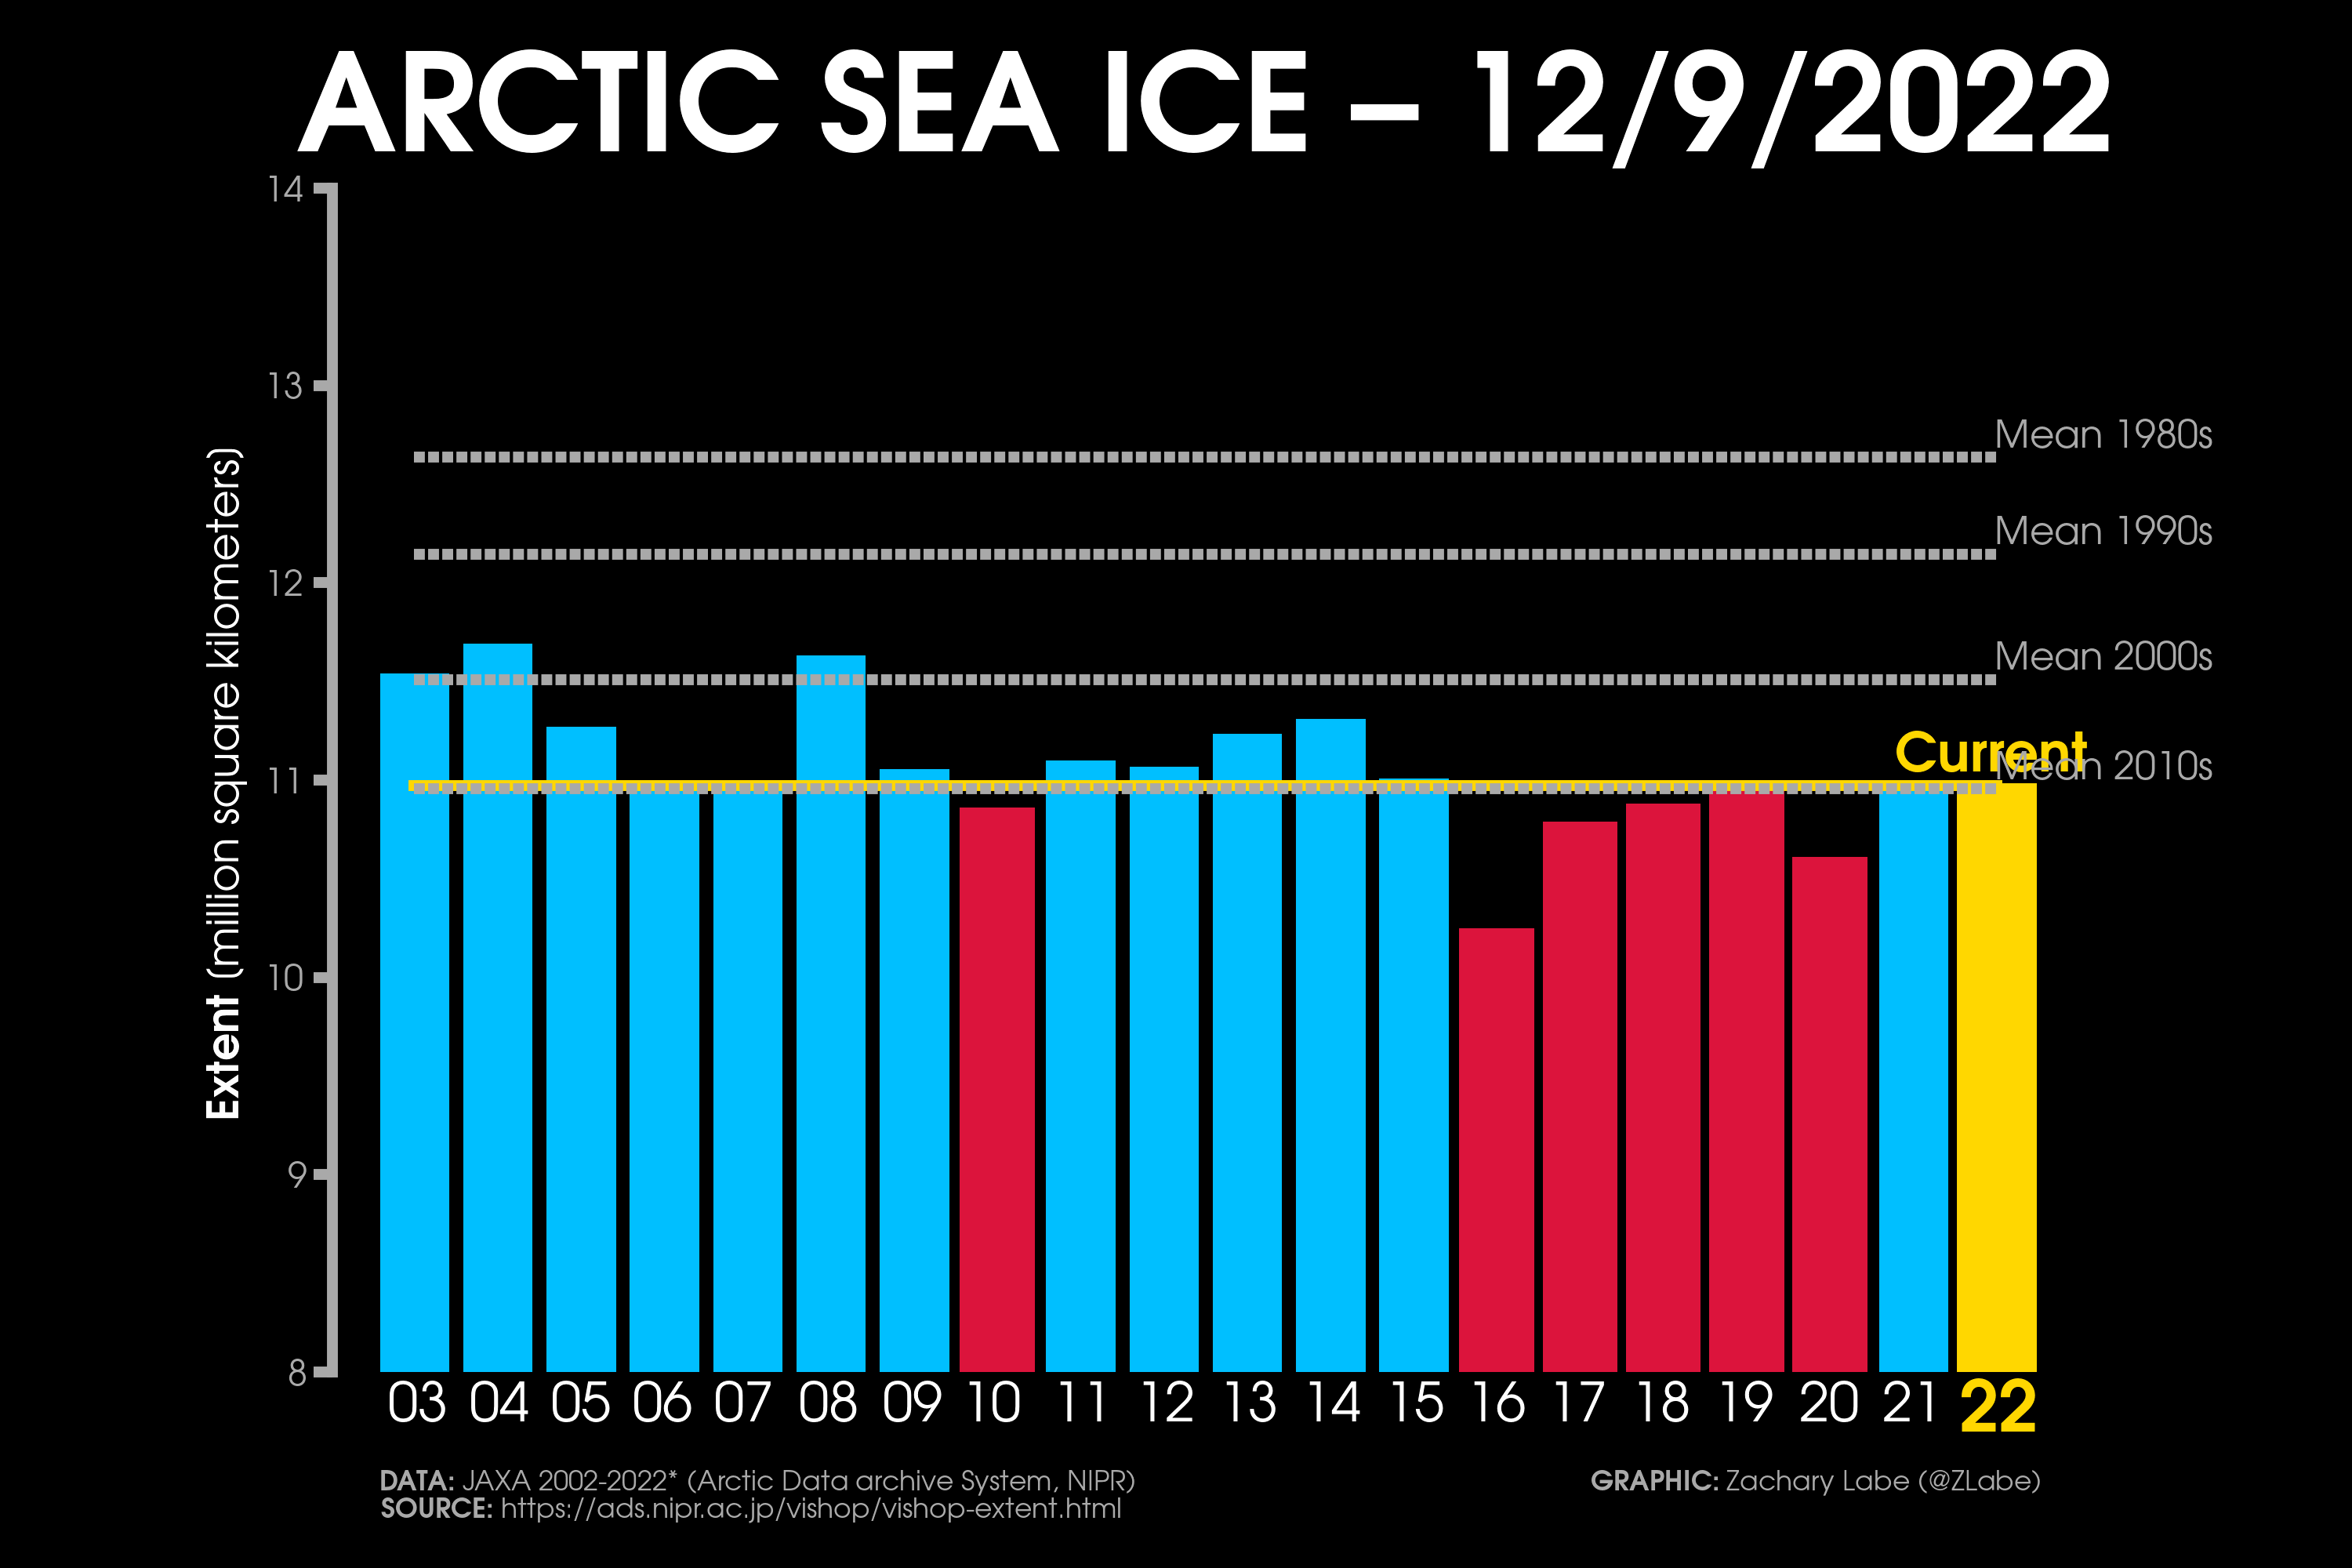 Arctic-sea-ice-extent-growth-winter-season-antarctica-abrupt-decline-sf-current